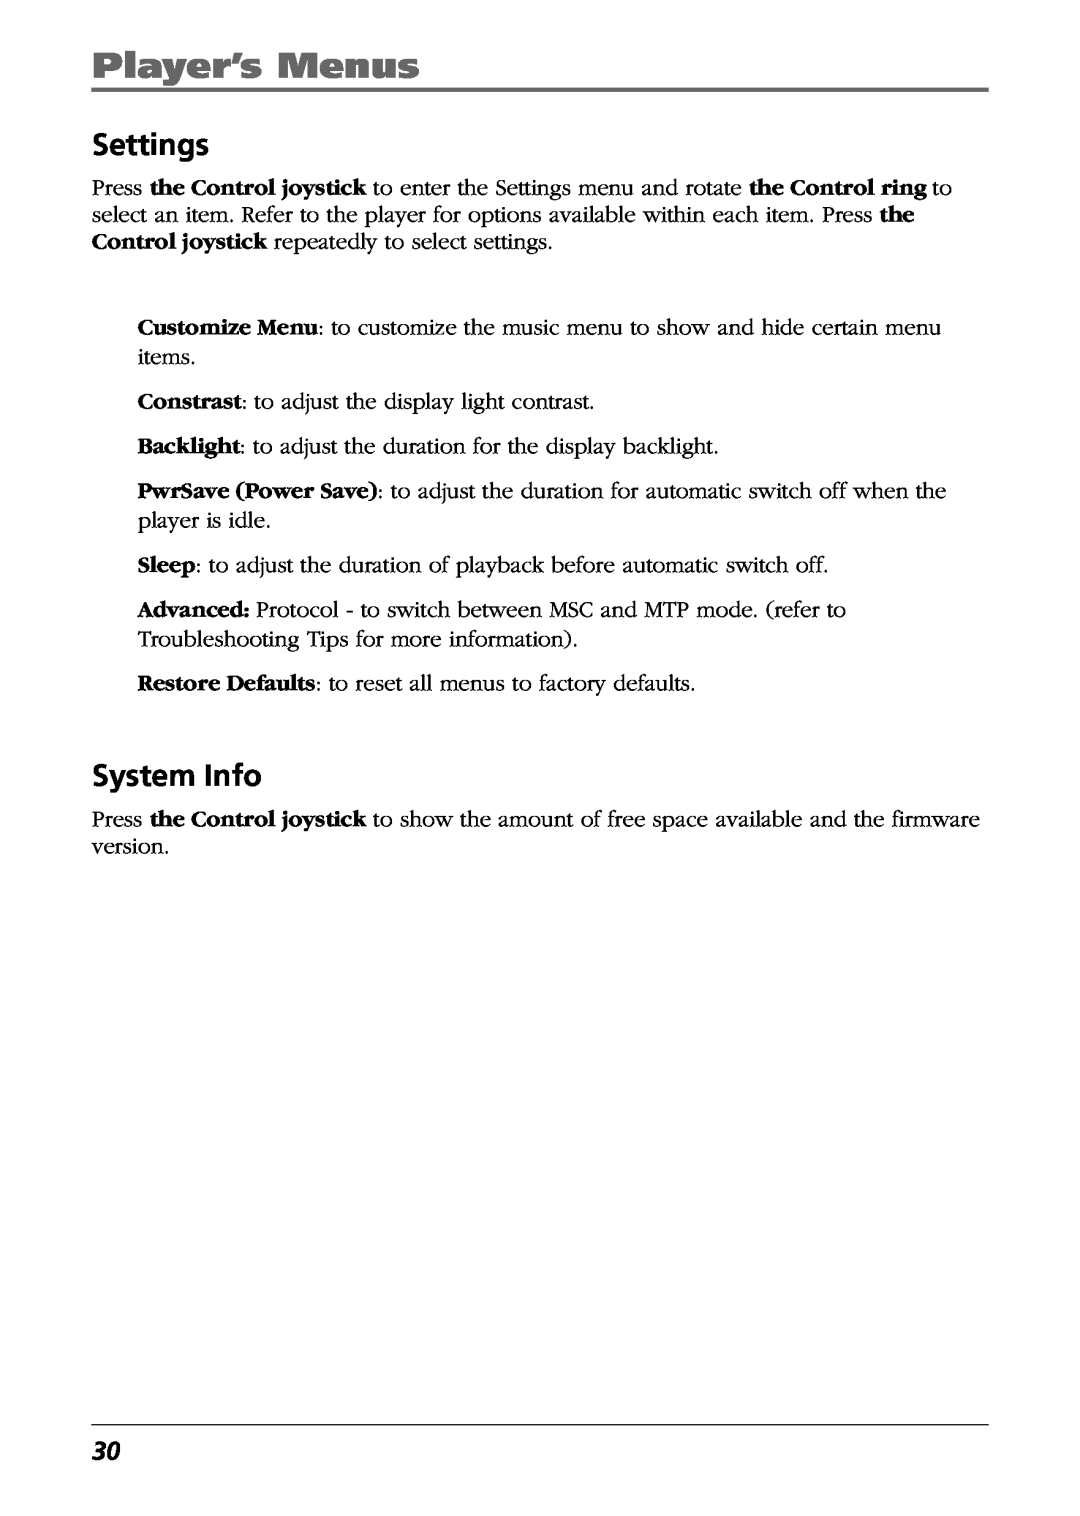 RCA H115/H125 manual Settings, System Info, Player’s Menus 